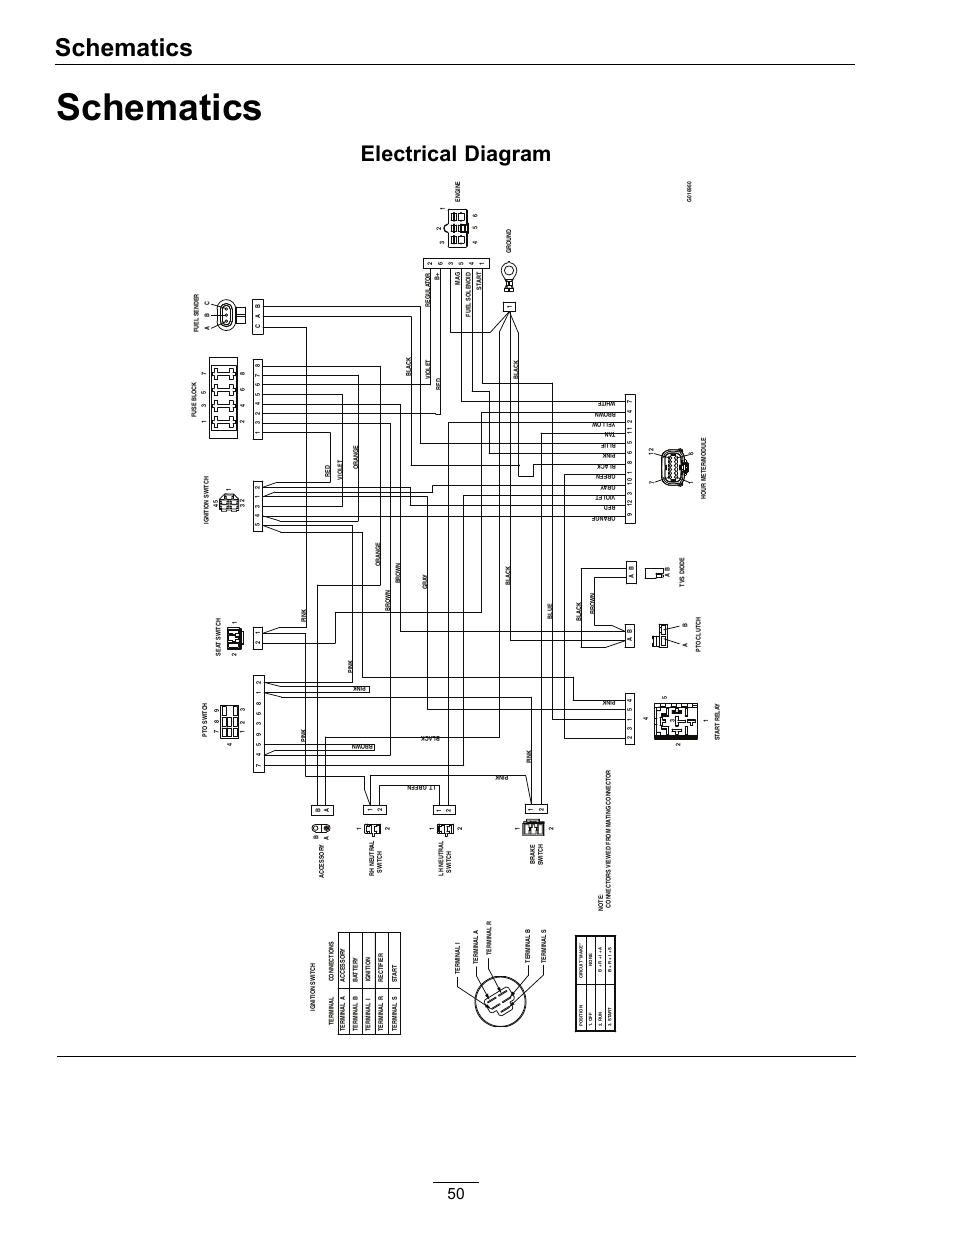 jideco relay wiring diagram